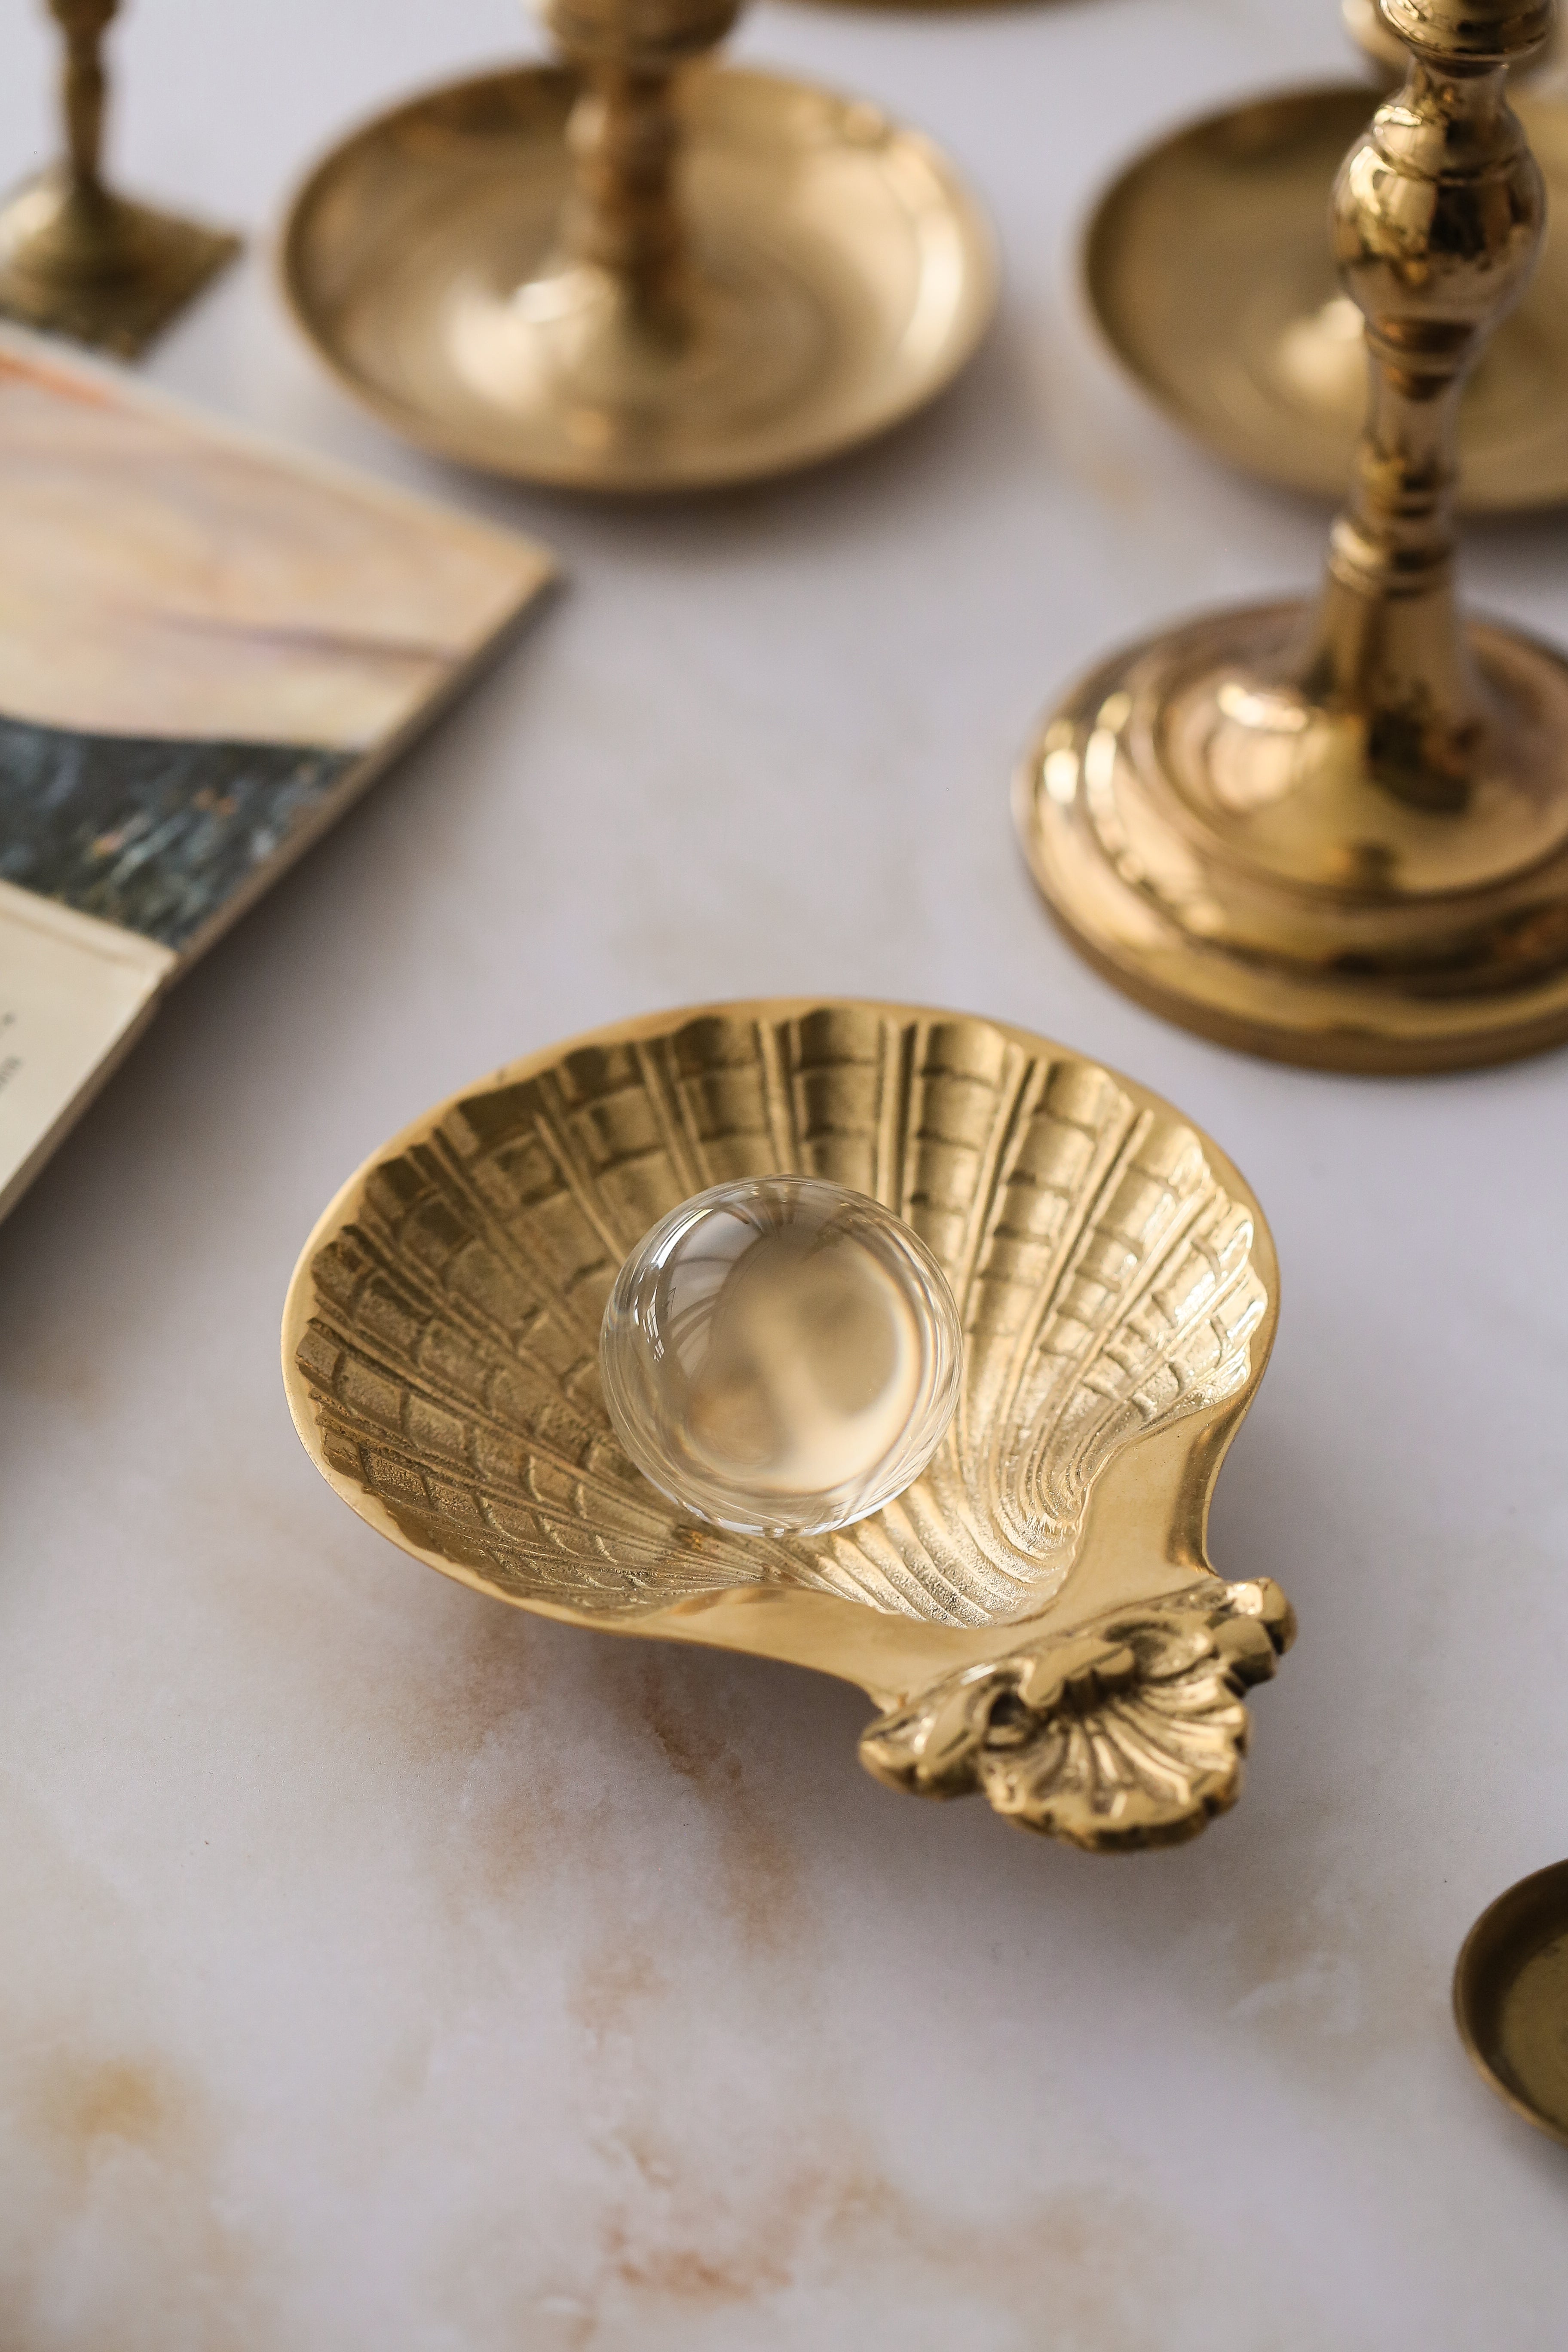 Vintage inspired shell bowl